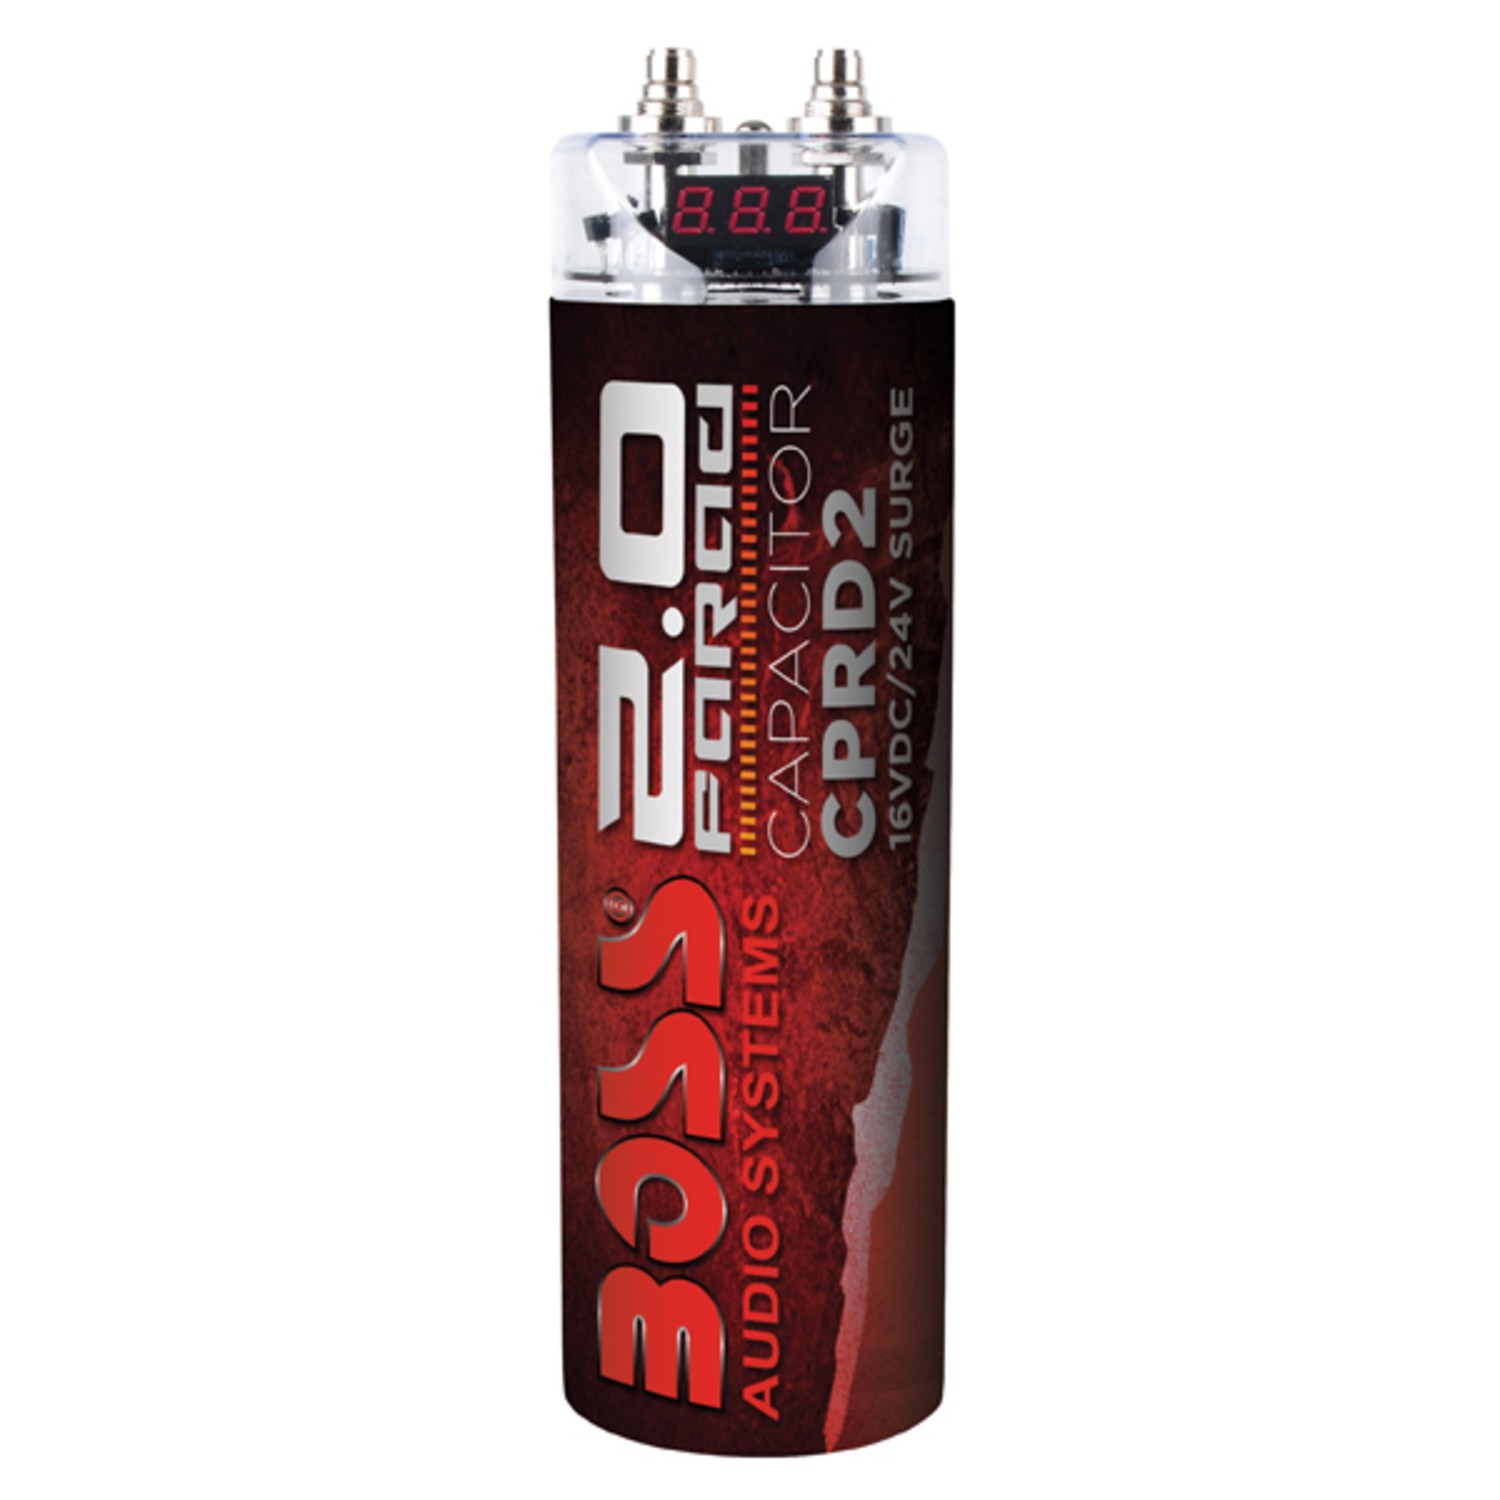 Boss Audio 2 Farad Power Capacitor - Red